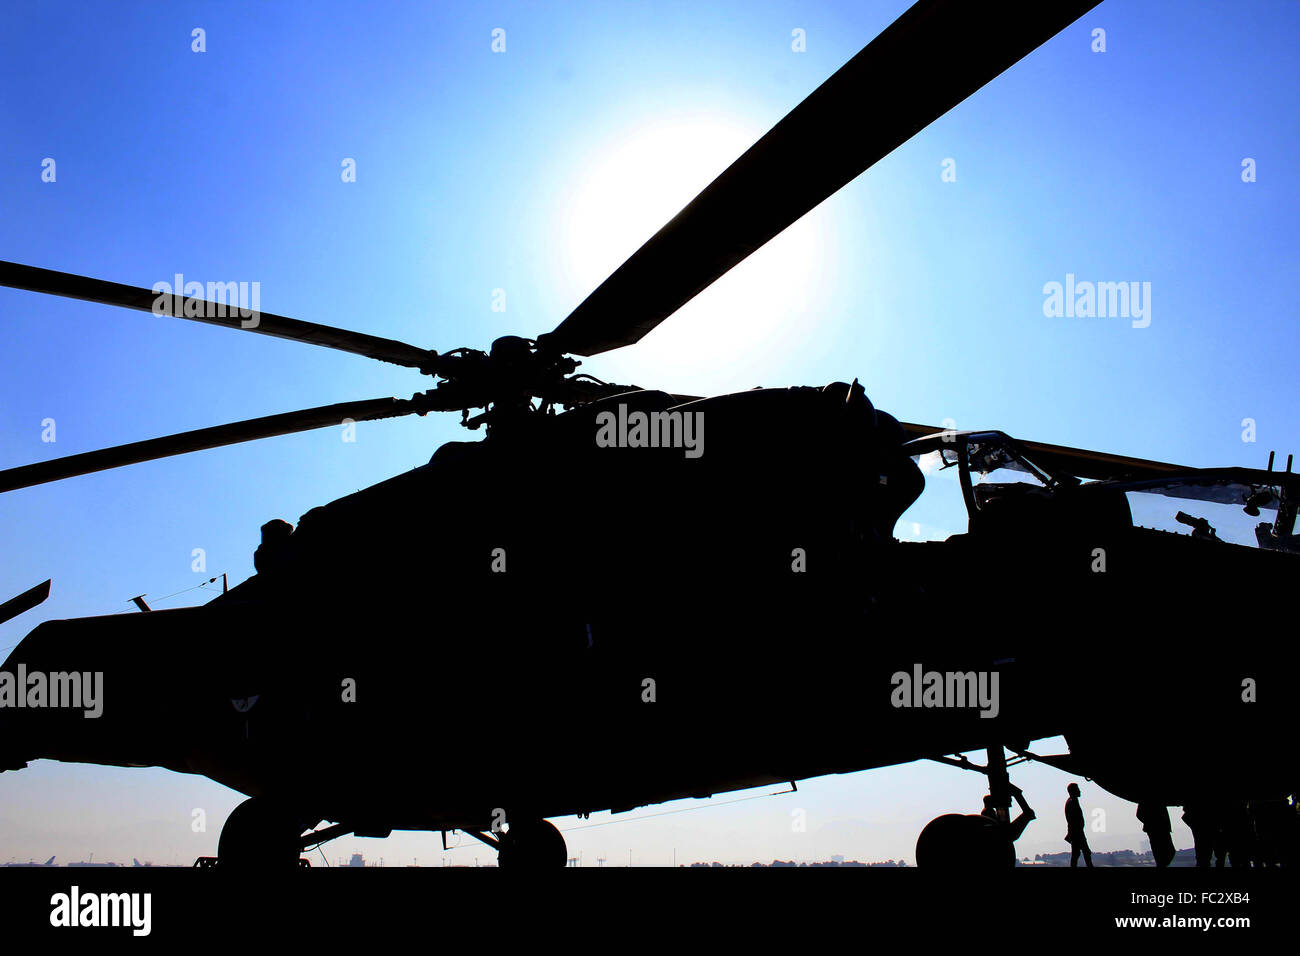 AFGHANISTAN, KABUL - 20 Januar: Afghan National Army prüft die Hubschrauber Mi - 25 am internationalen Flughafen Hamid Karzai am 20. Januar 2016. Stockfoto